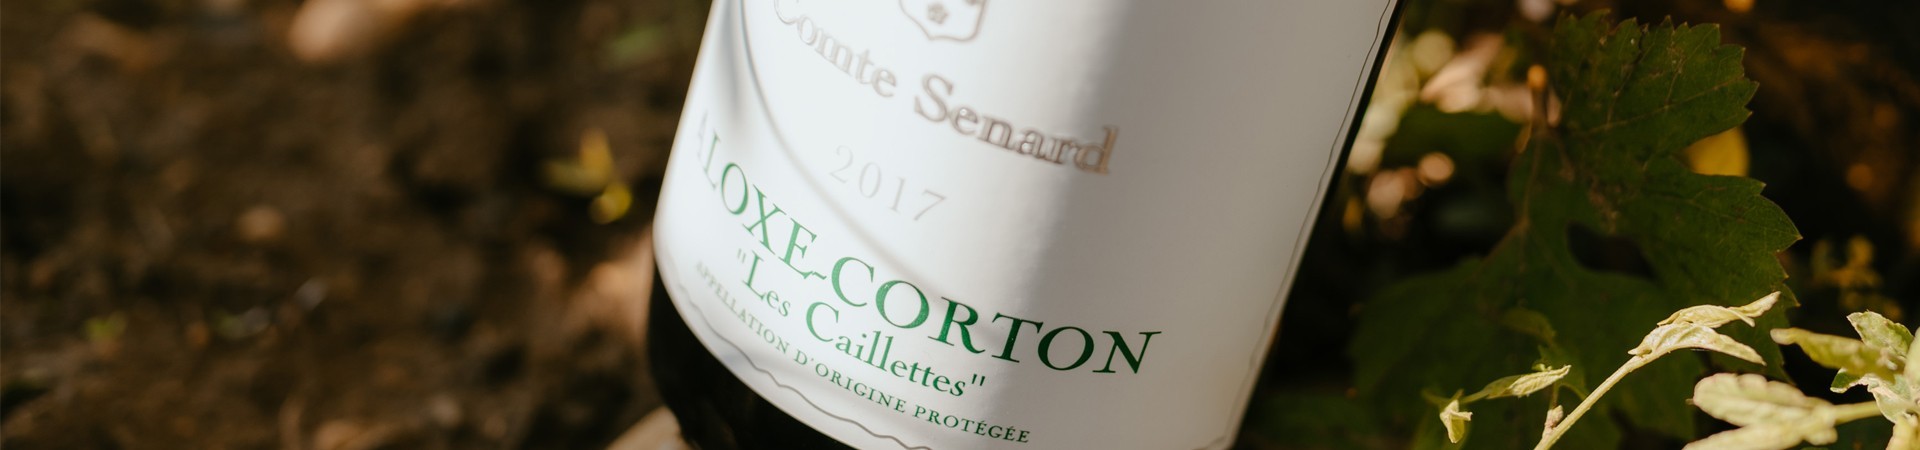 Vin de Bourgogne - Maison Benoit Chapelle